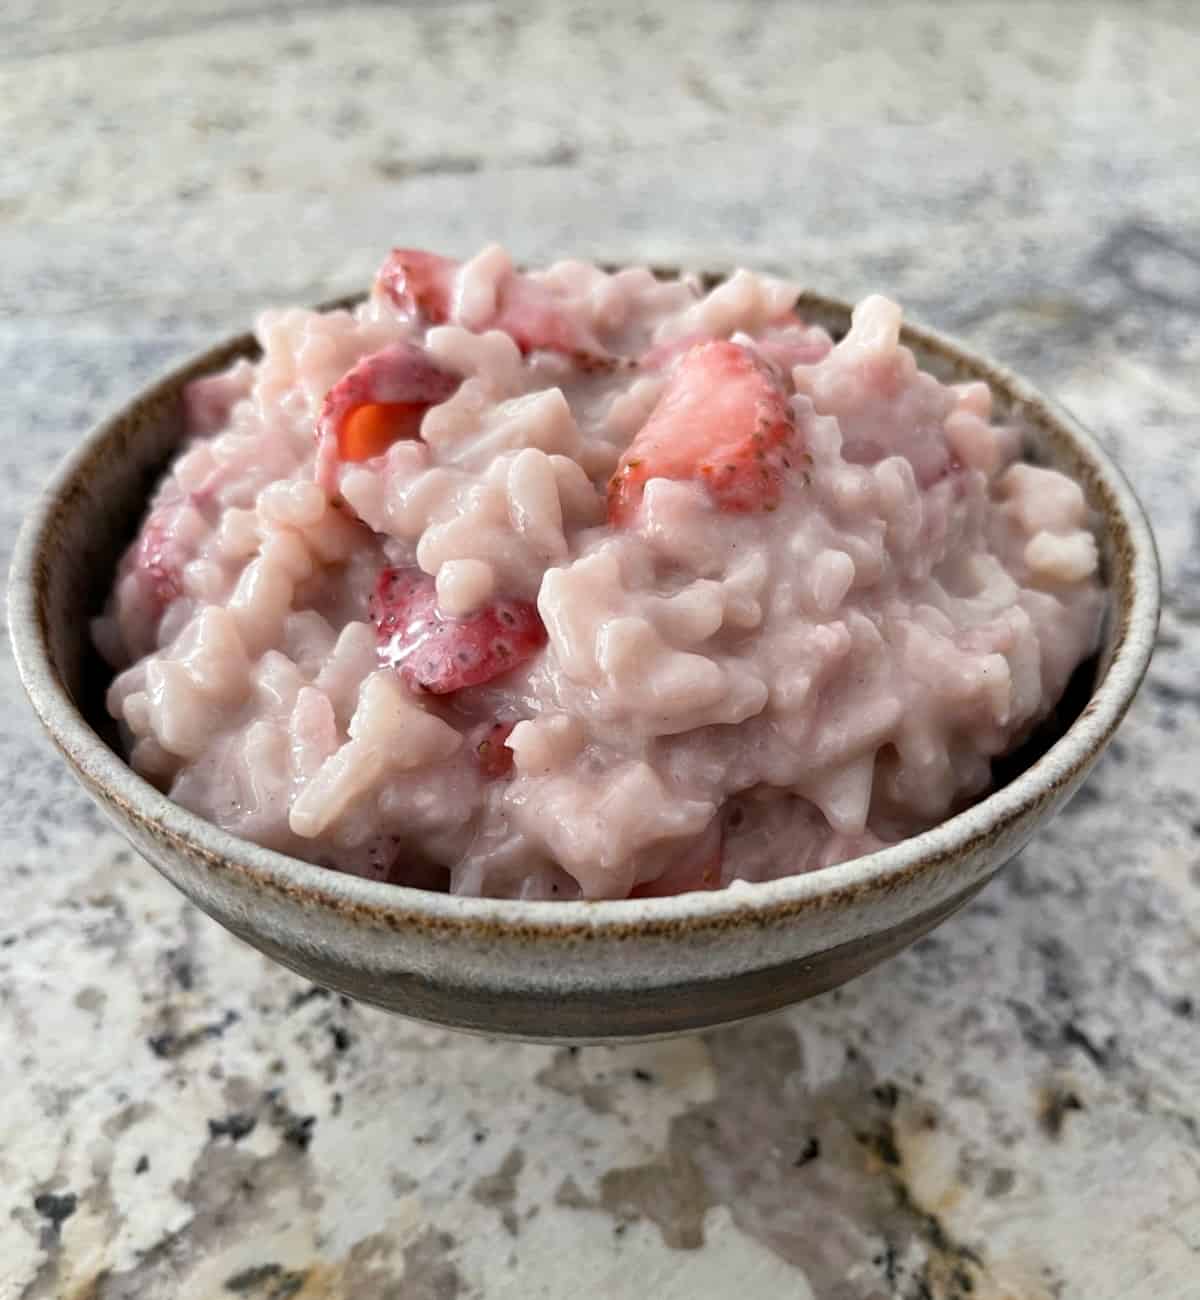 Skinny strawberry rice pudding in brown ceramic bowl on granite counter.